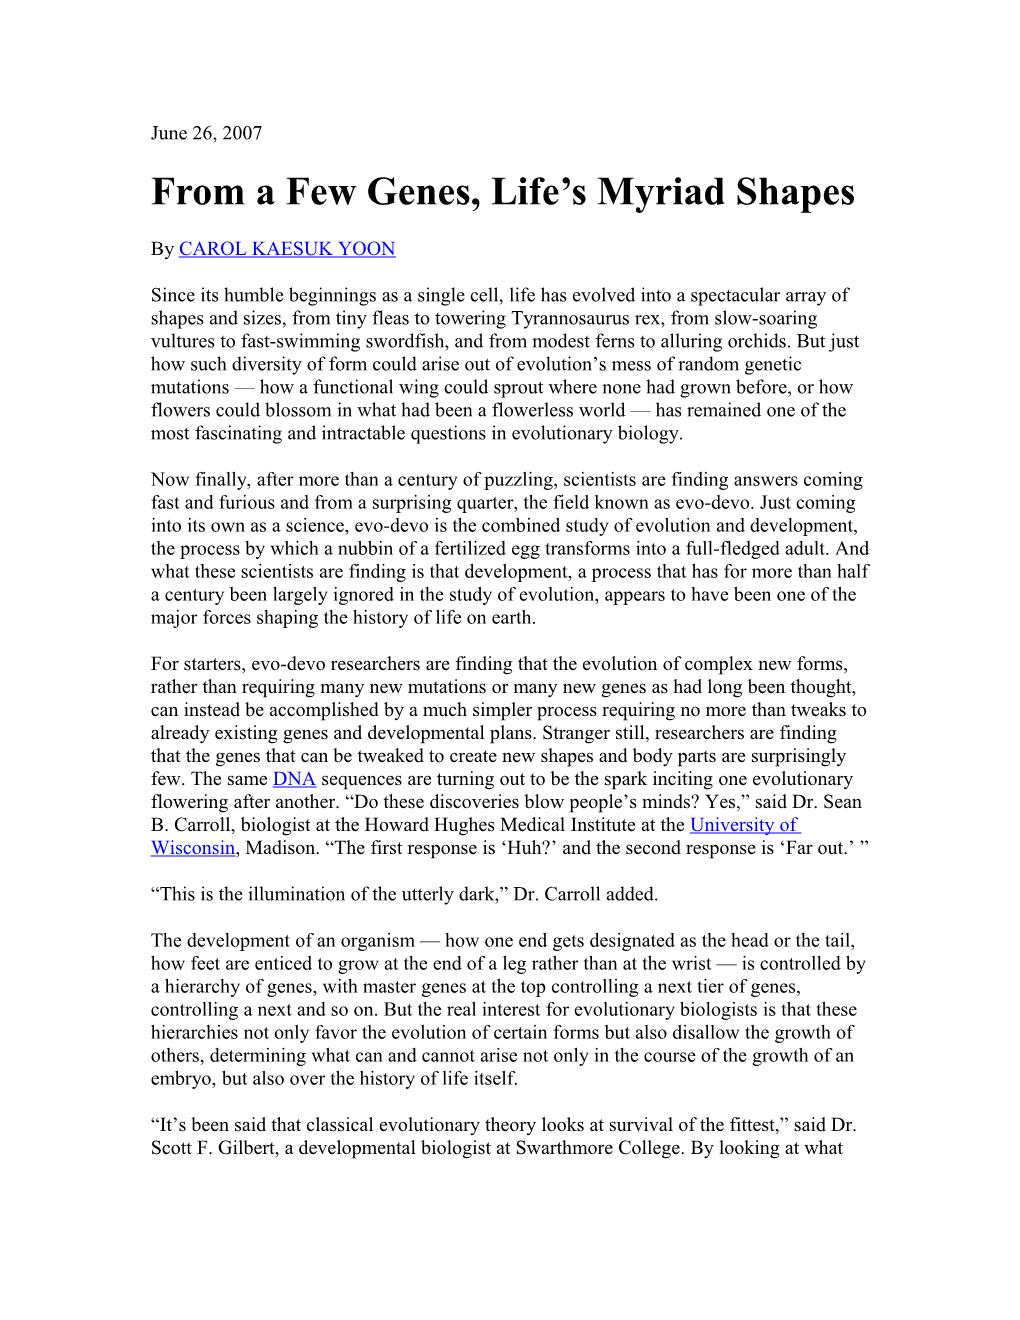 From a Few Genes, Life S Myriad Shapes